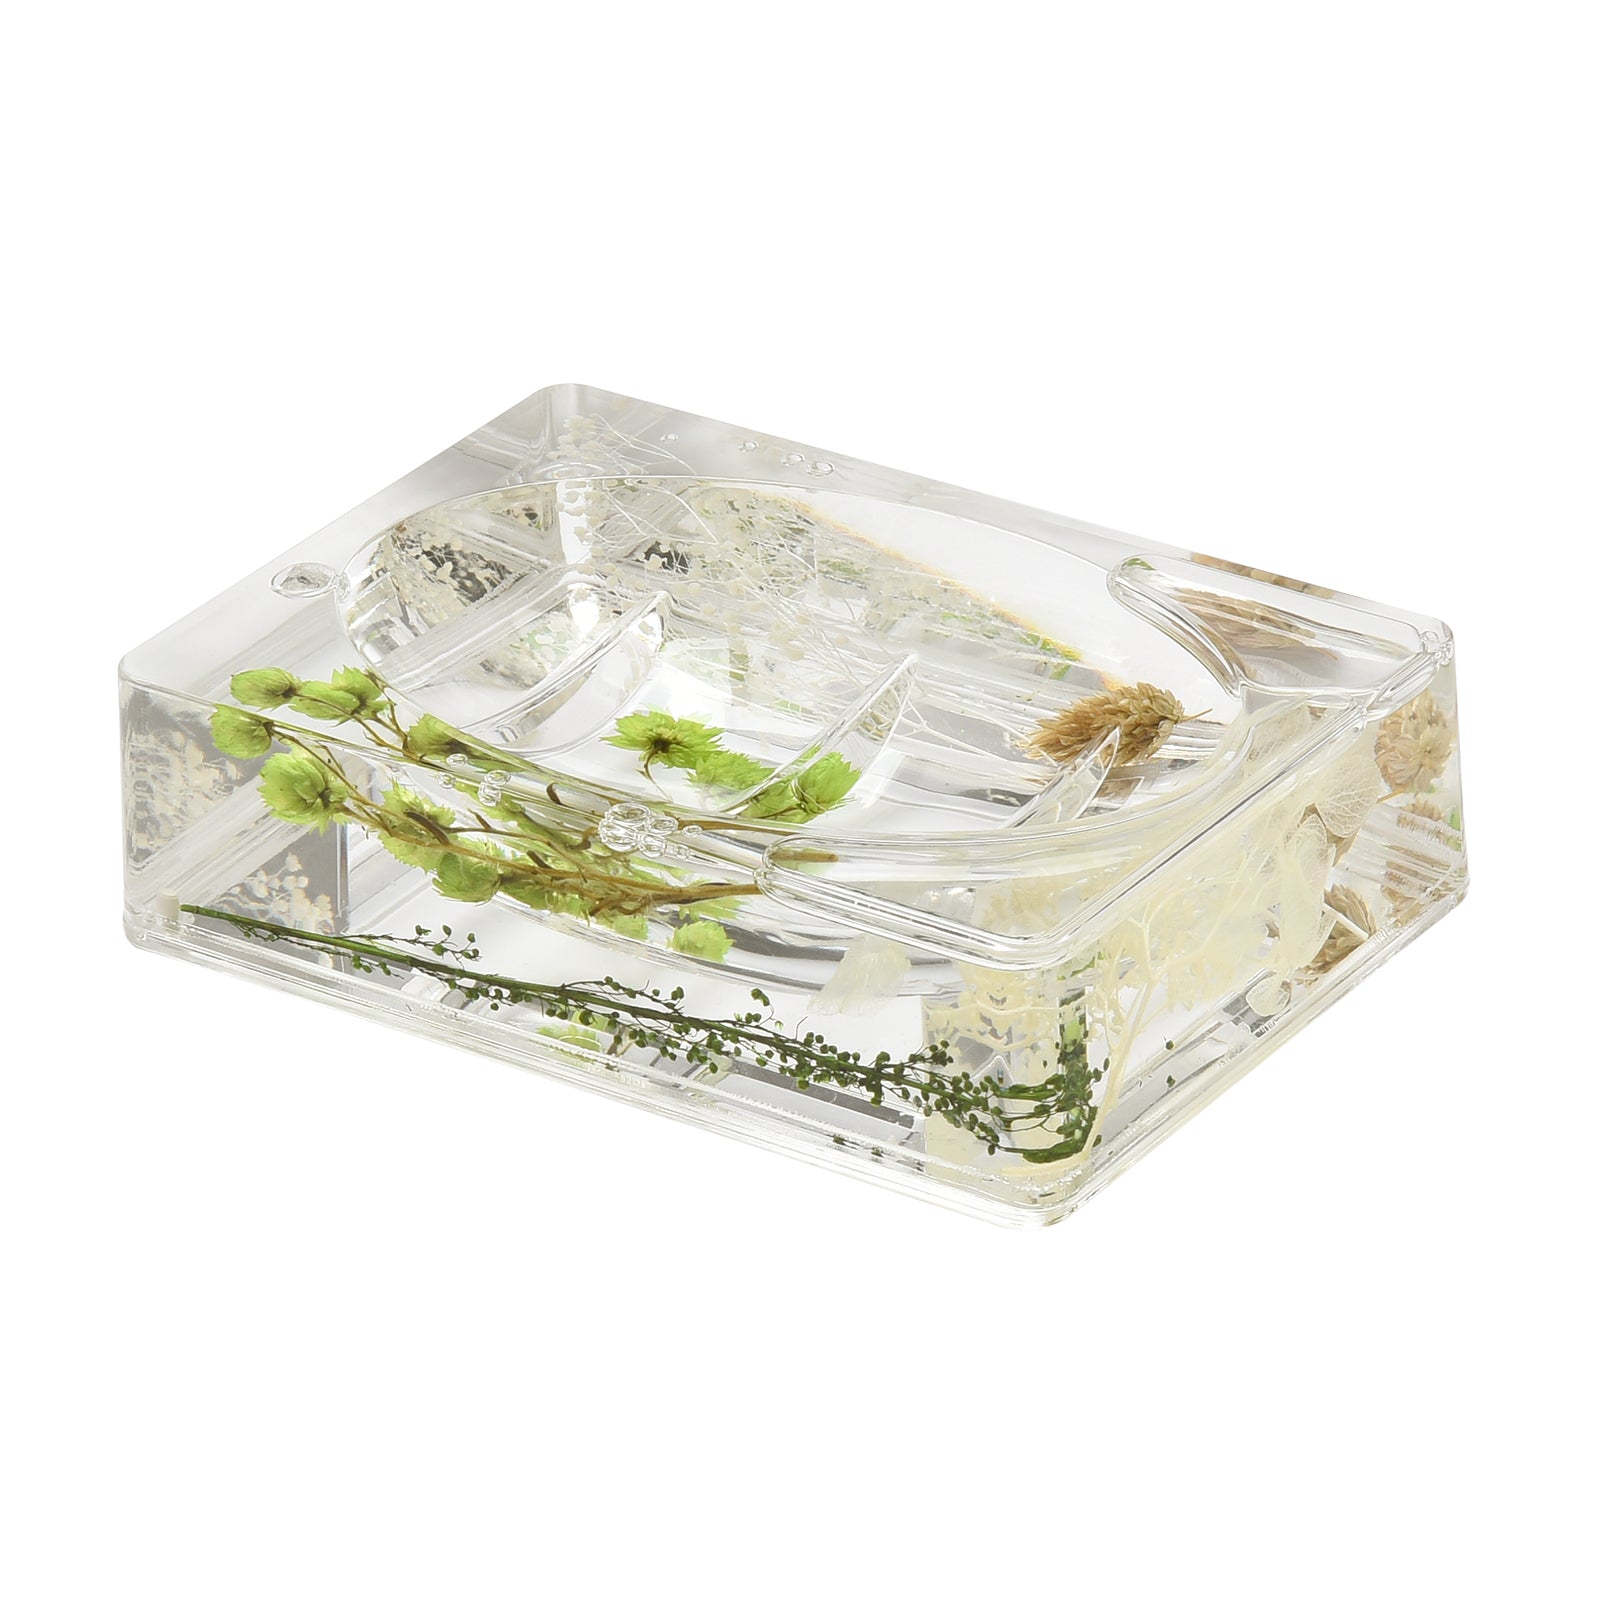 5 Piece Acrylic Liquid 3D Floating Motion Bathroom Vanity Accessory Set Green Plants